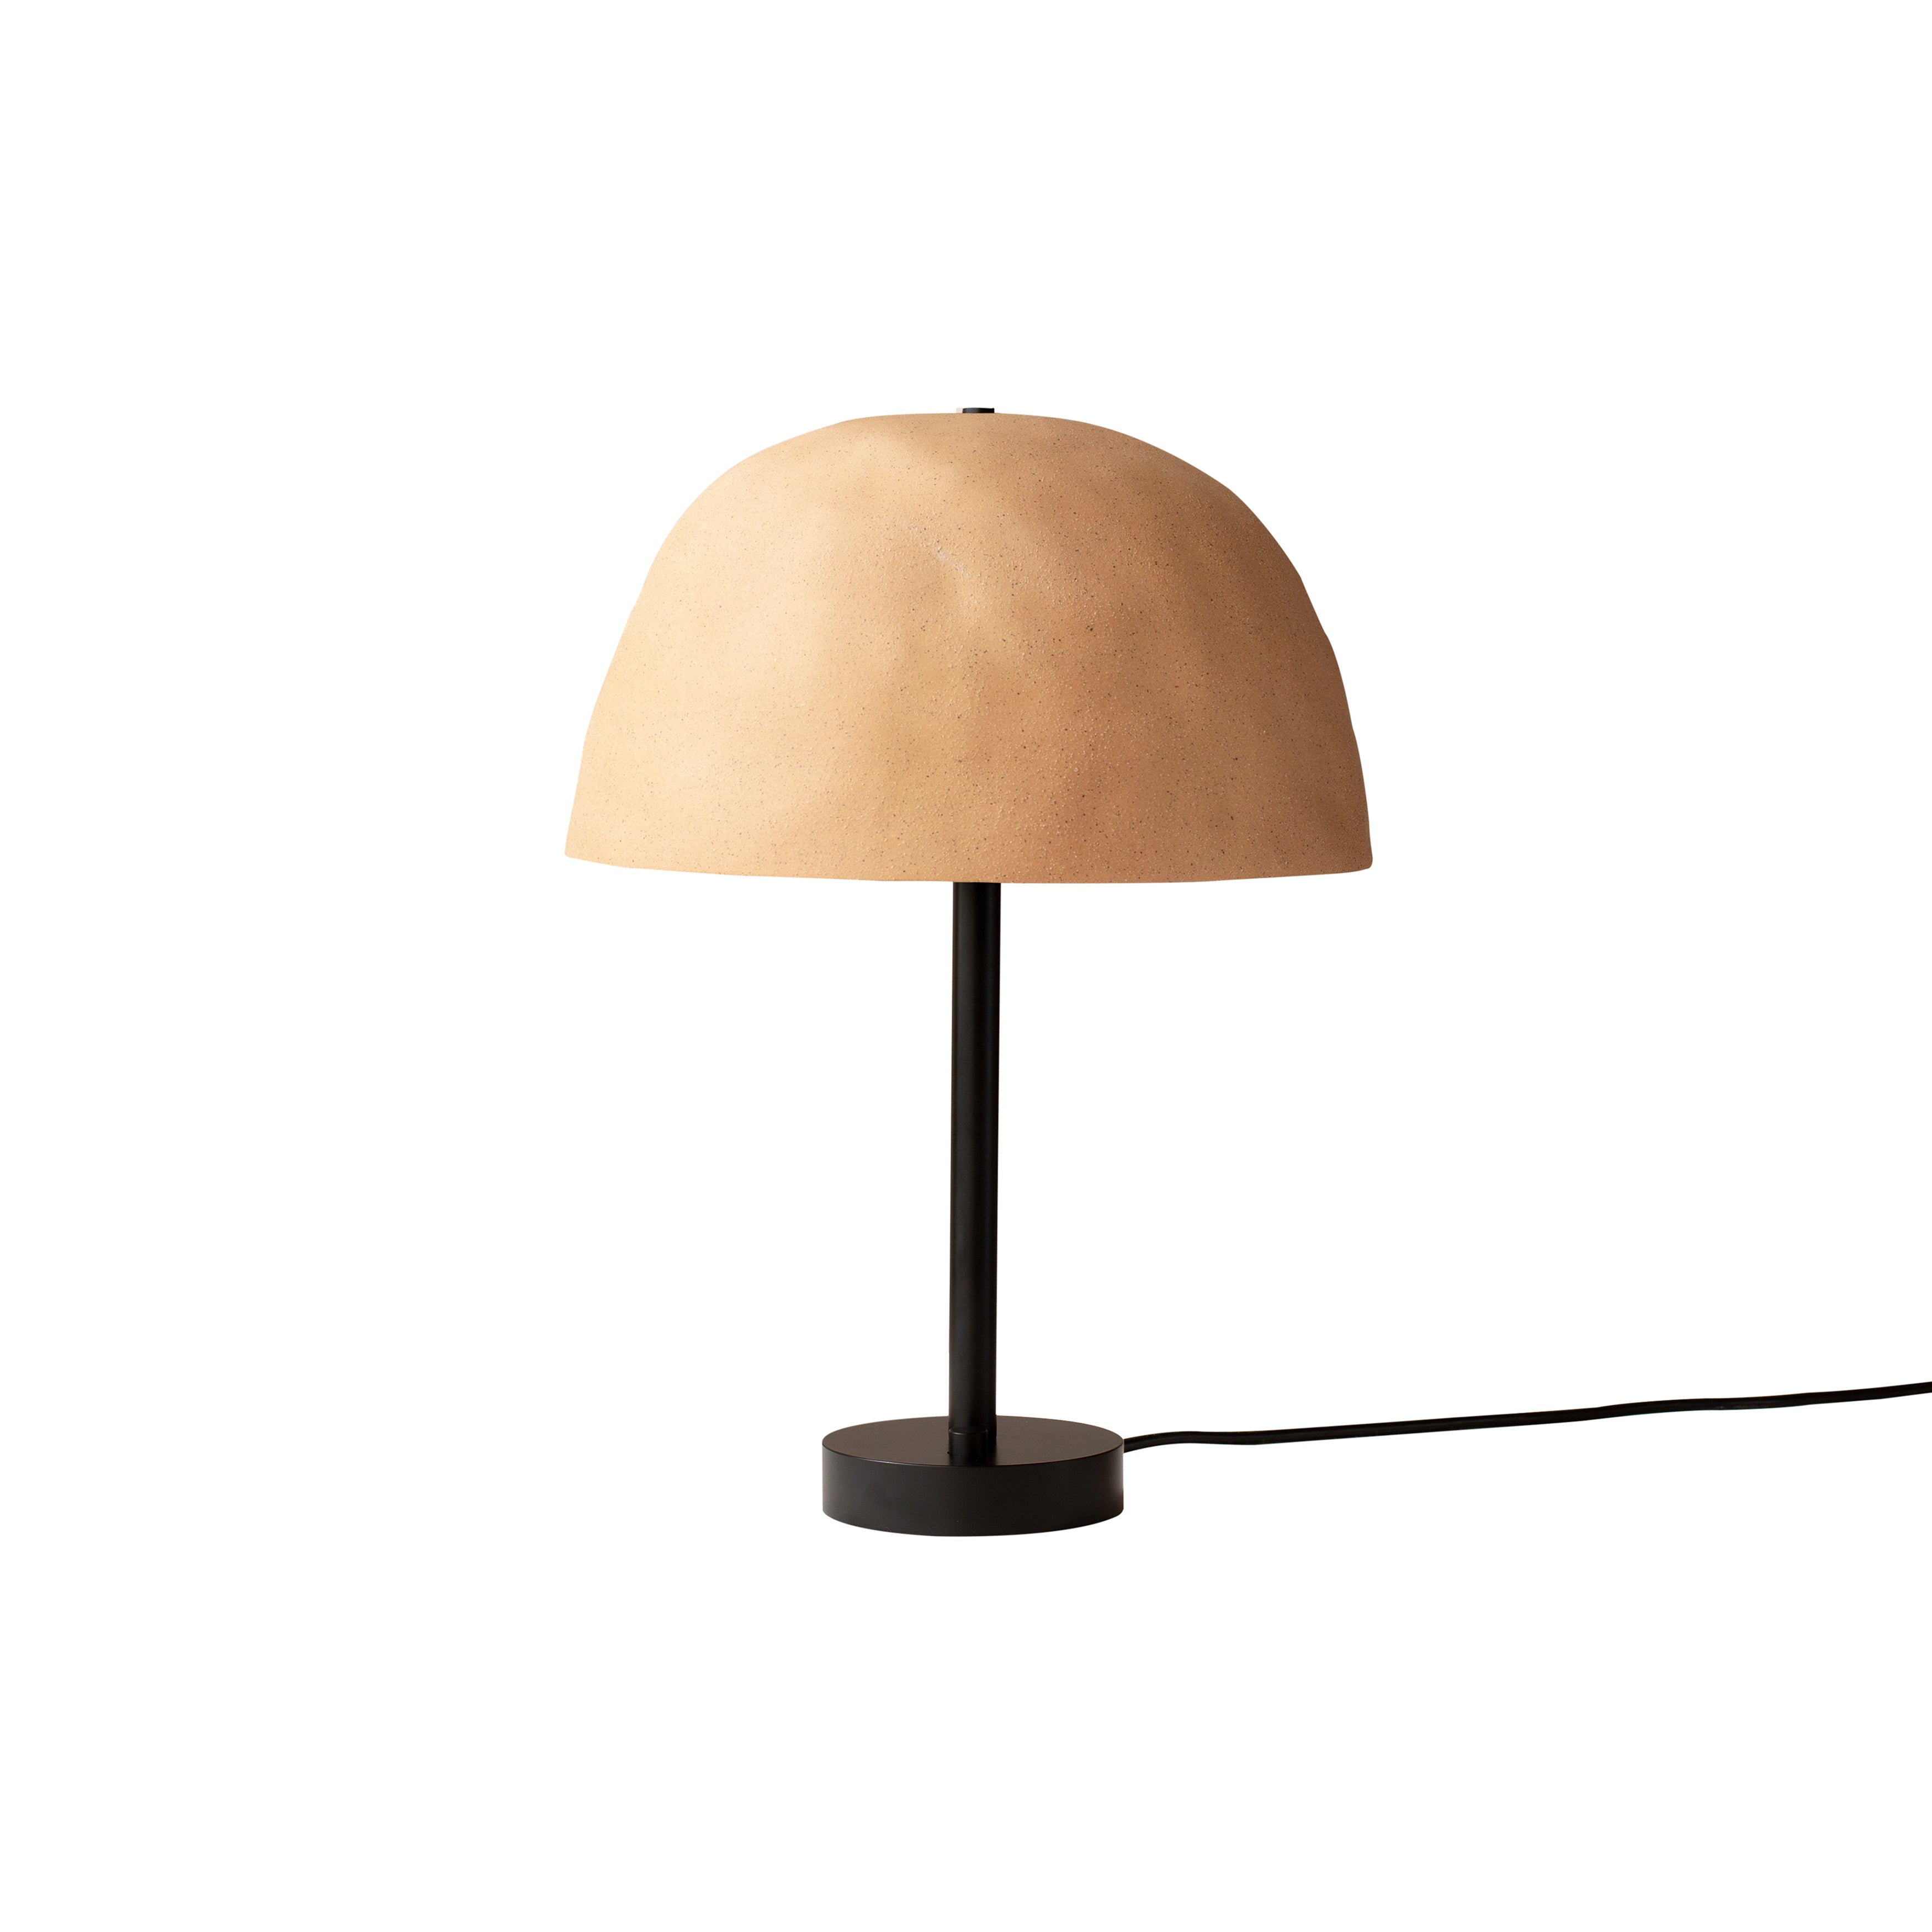 Dome Table Lamp: Tan Clay + Black